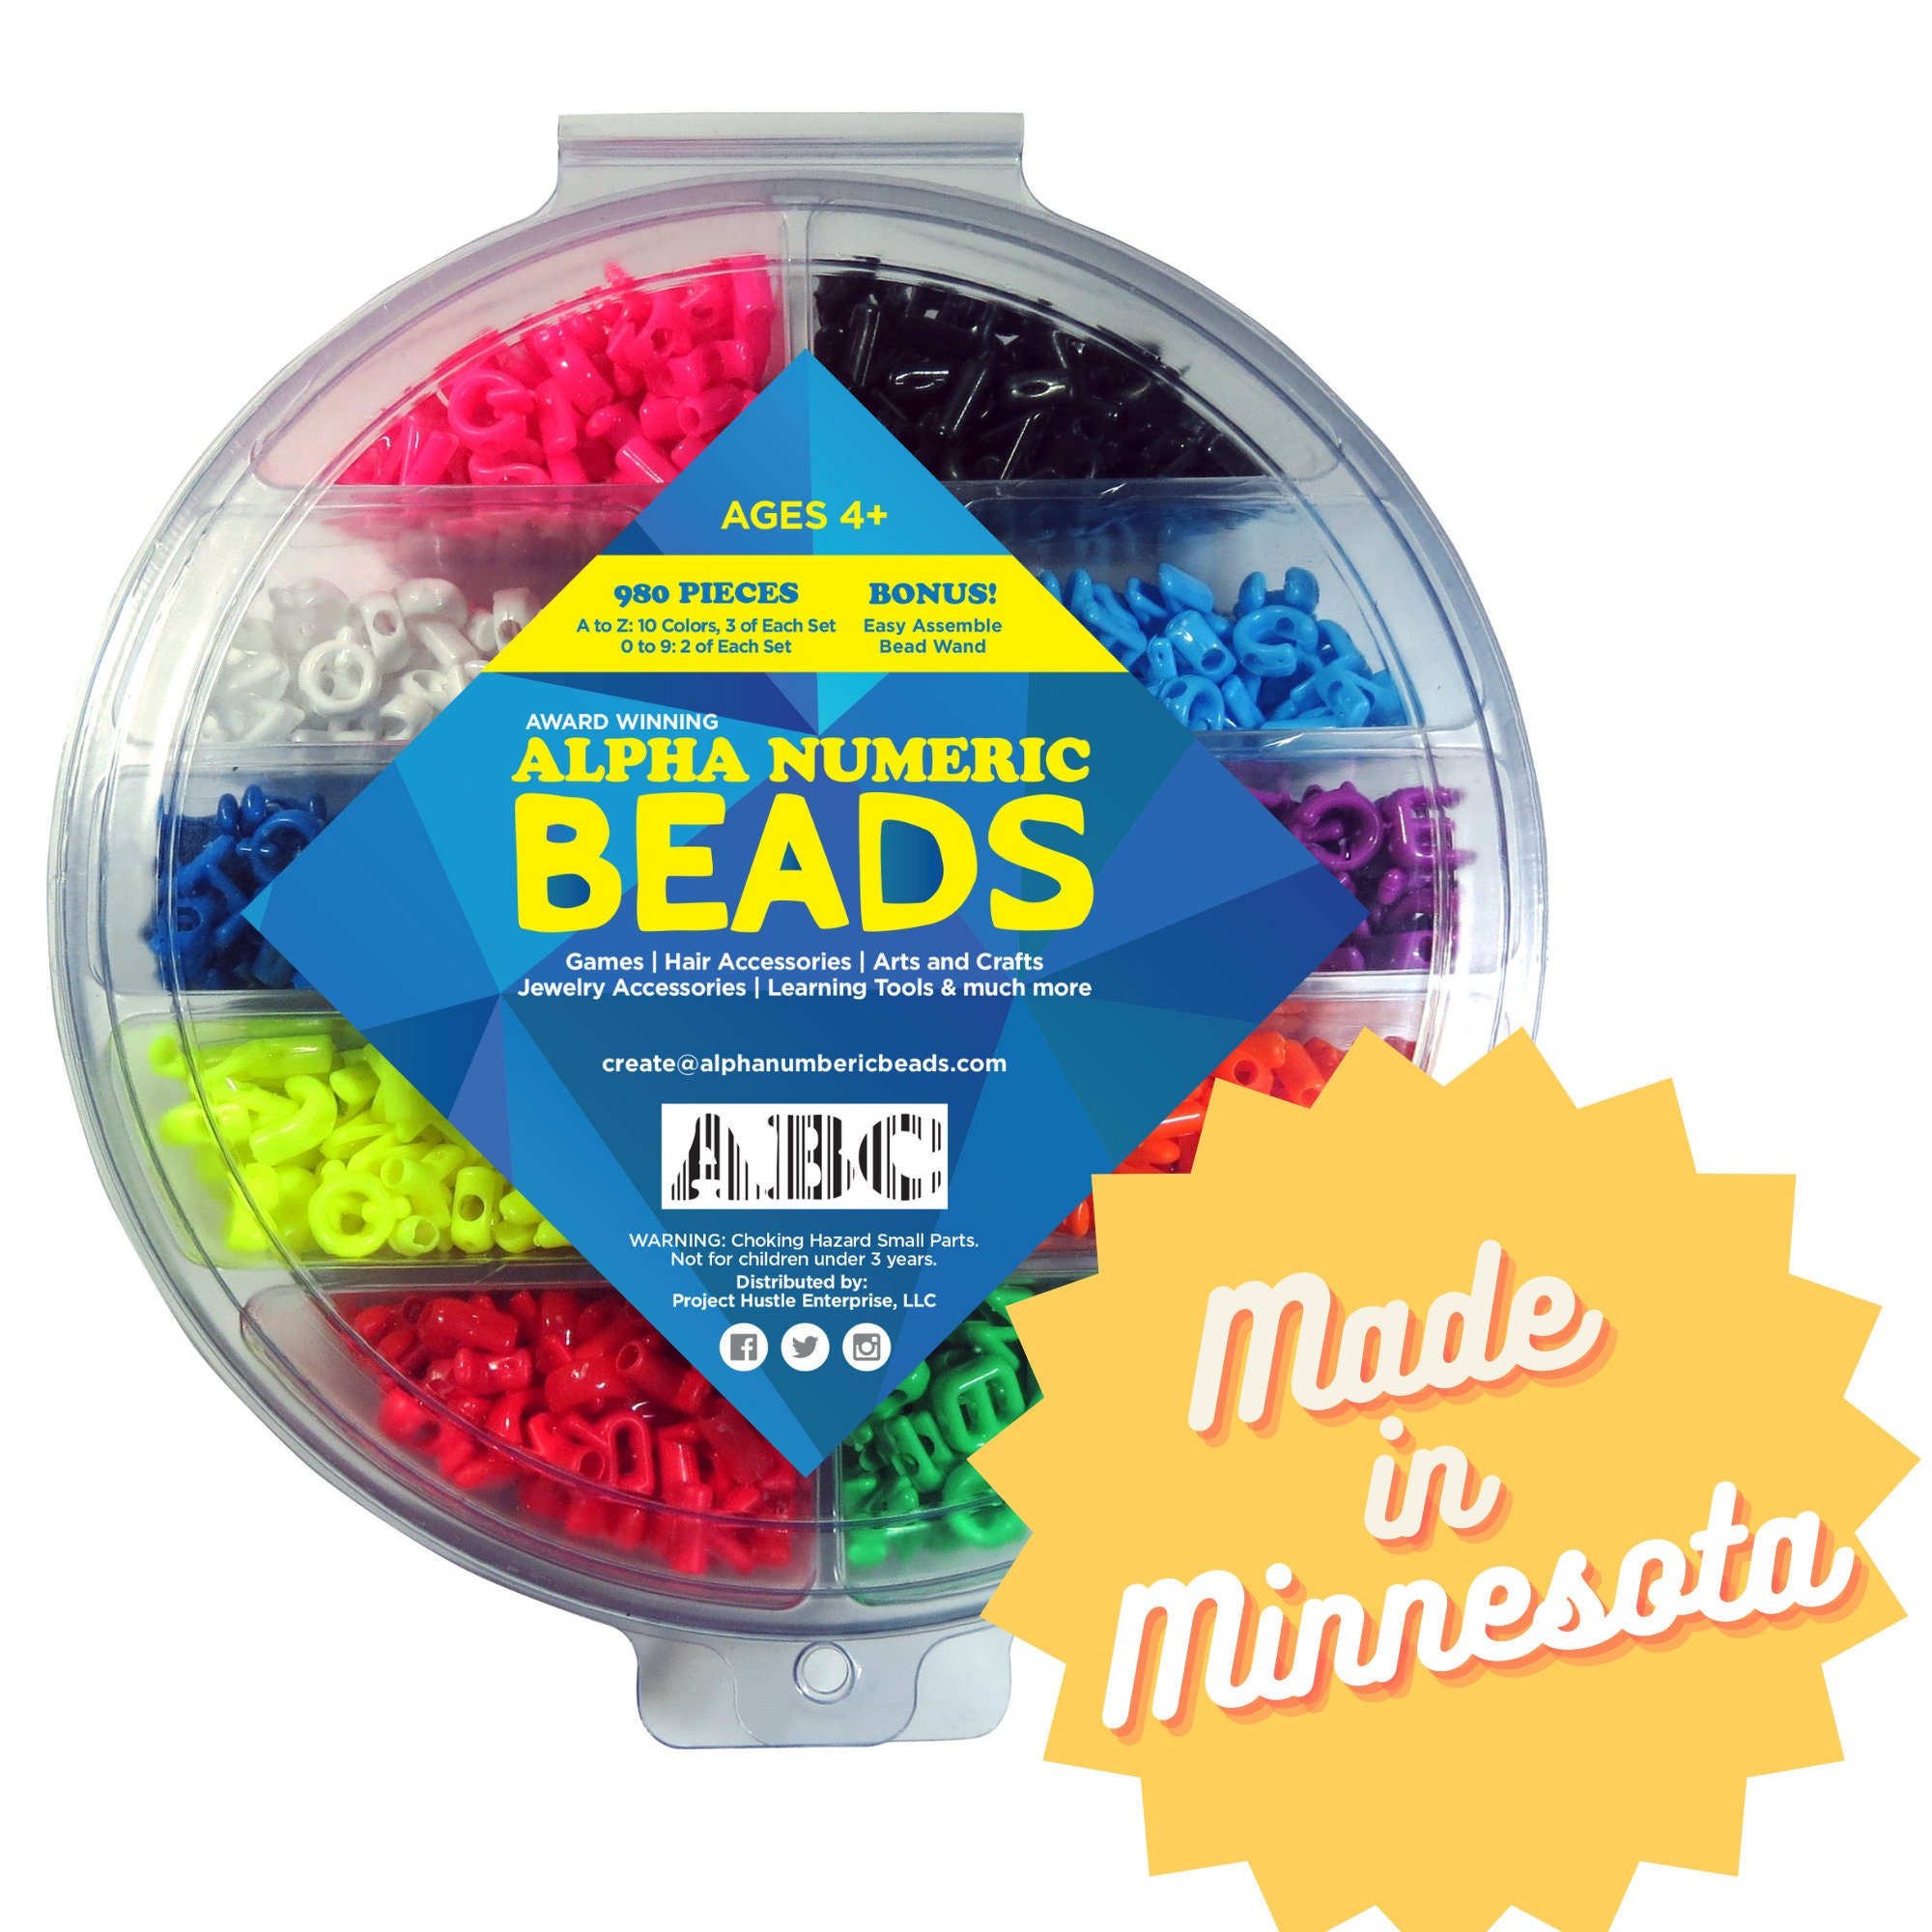 ABC Bead Bracelet Pony Beads Kits Colorful Stretch Bracelet